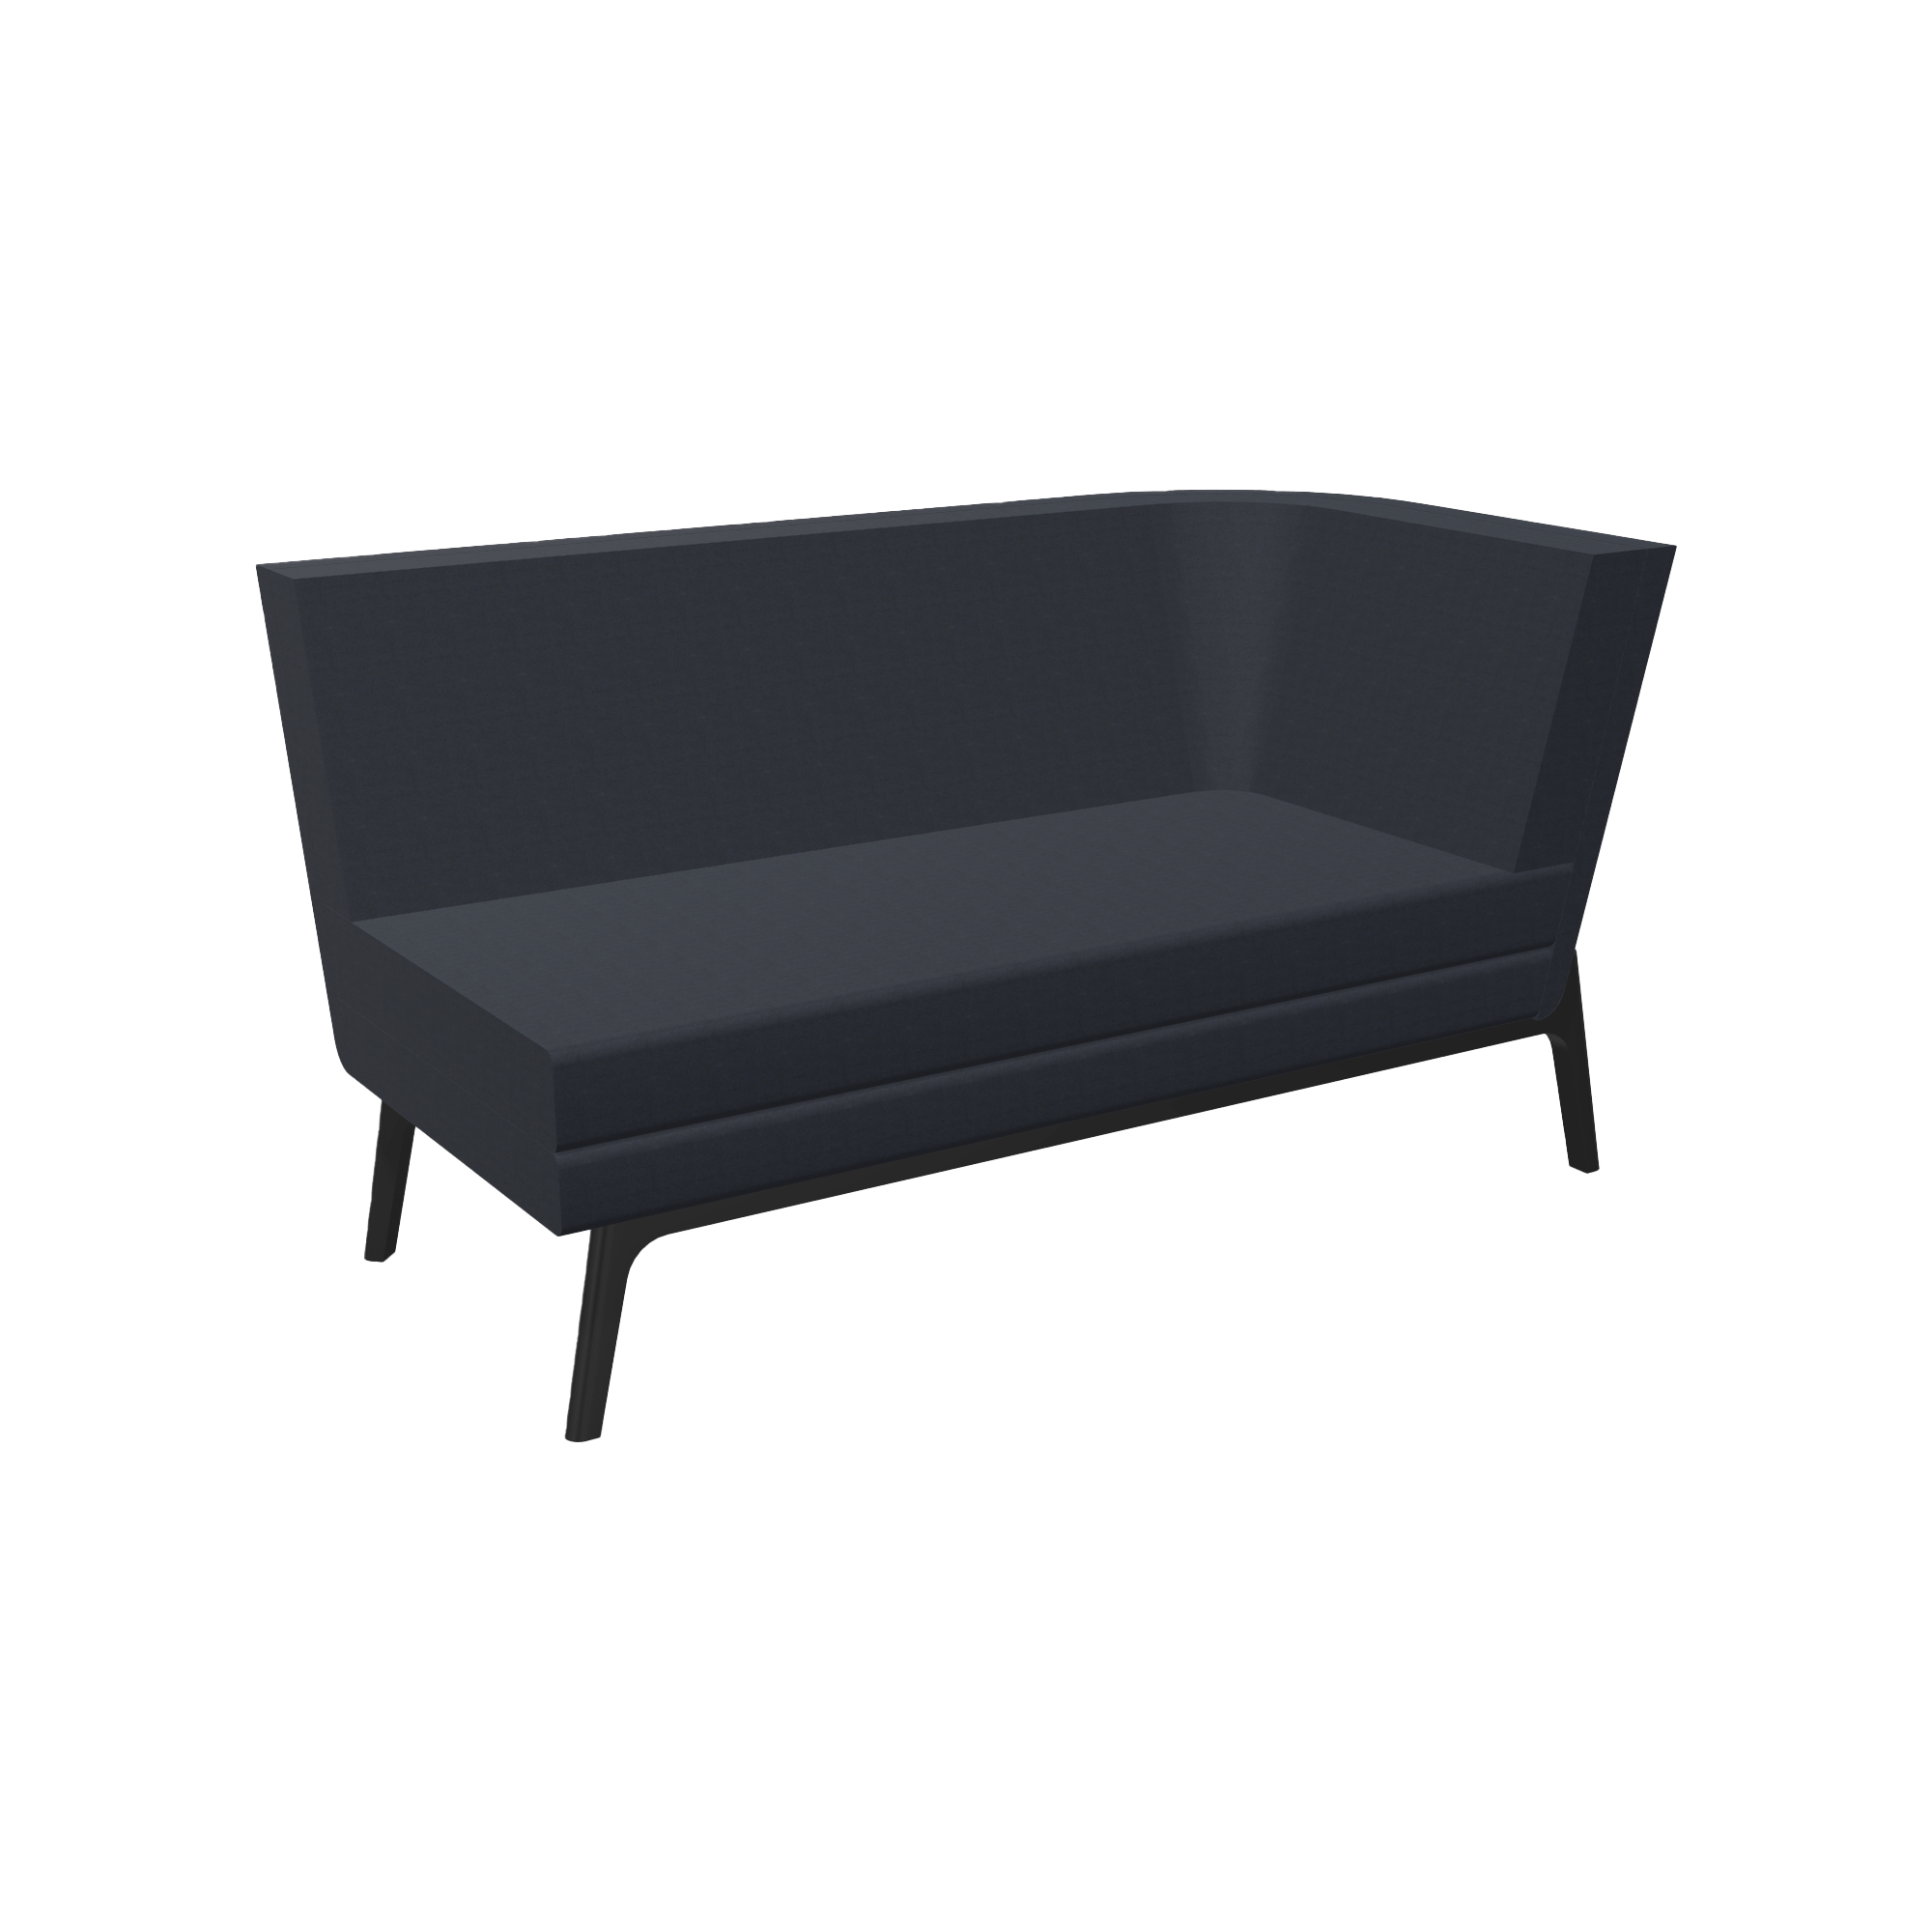 A black sofa section for a modular sofa